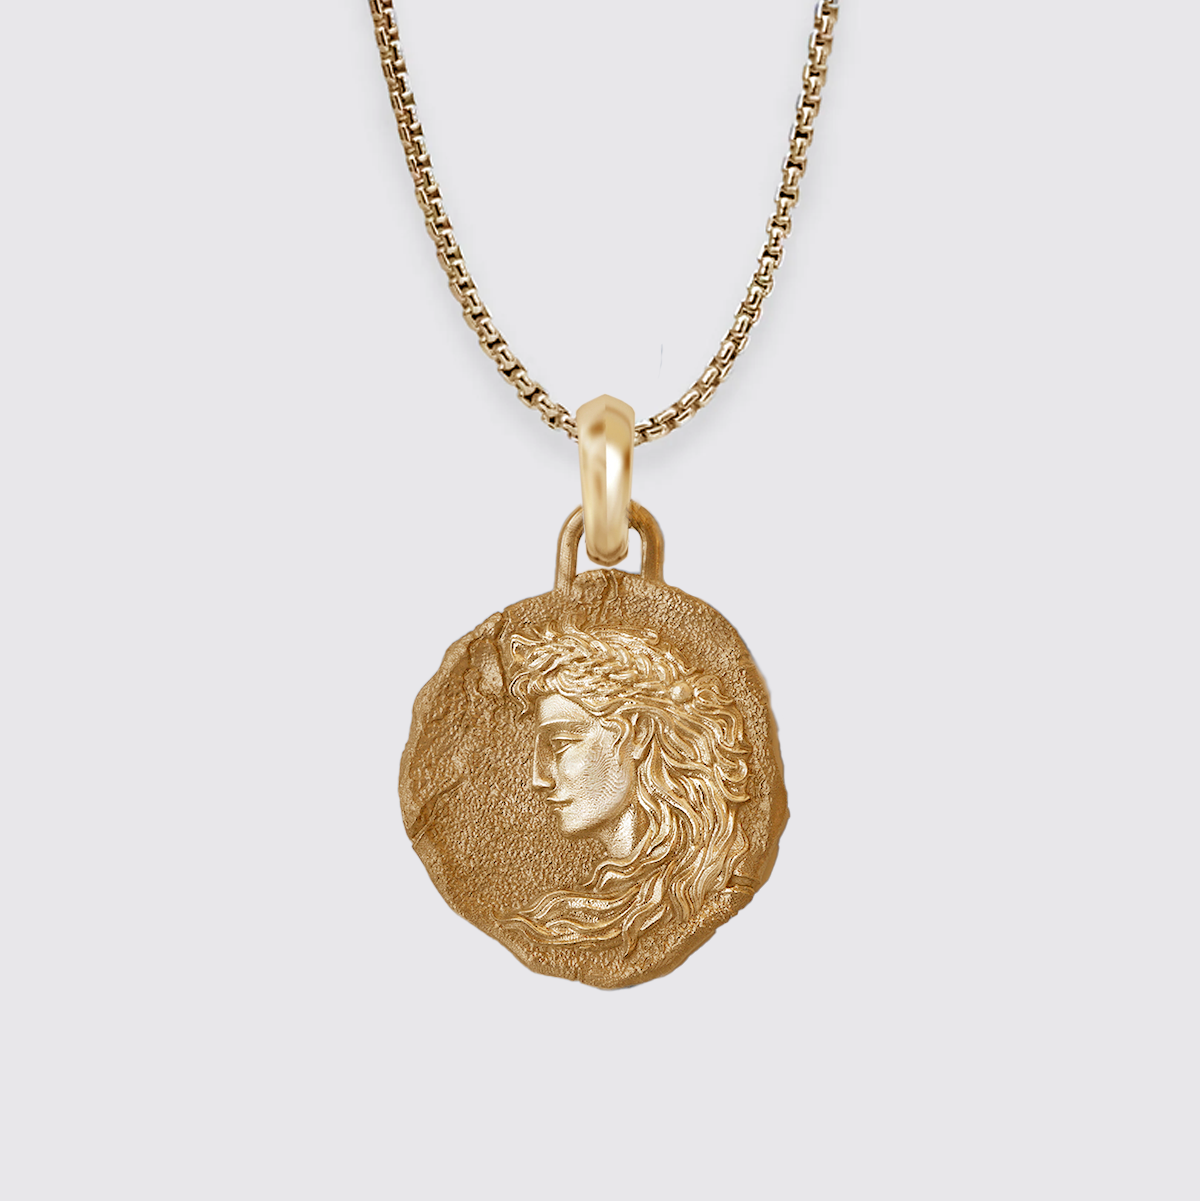 Virgo Zodiac Pendant in Sterling Silver and 14K Gold